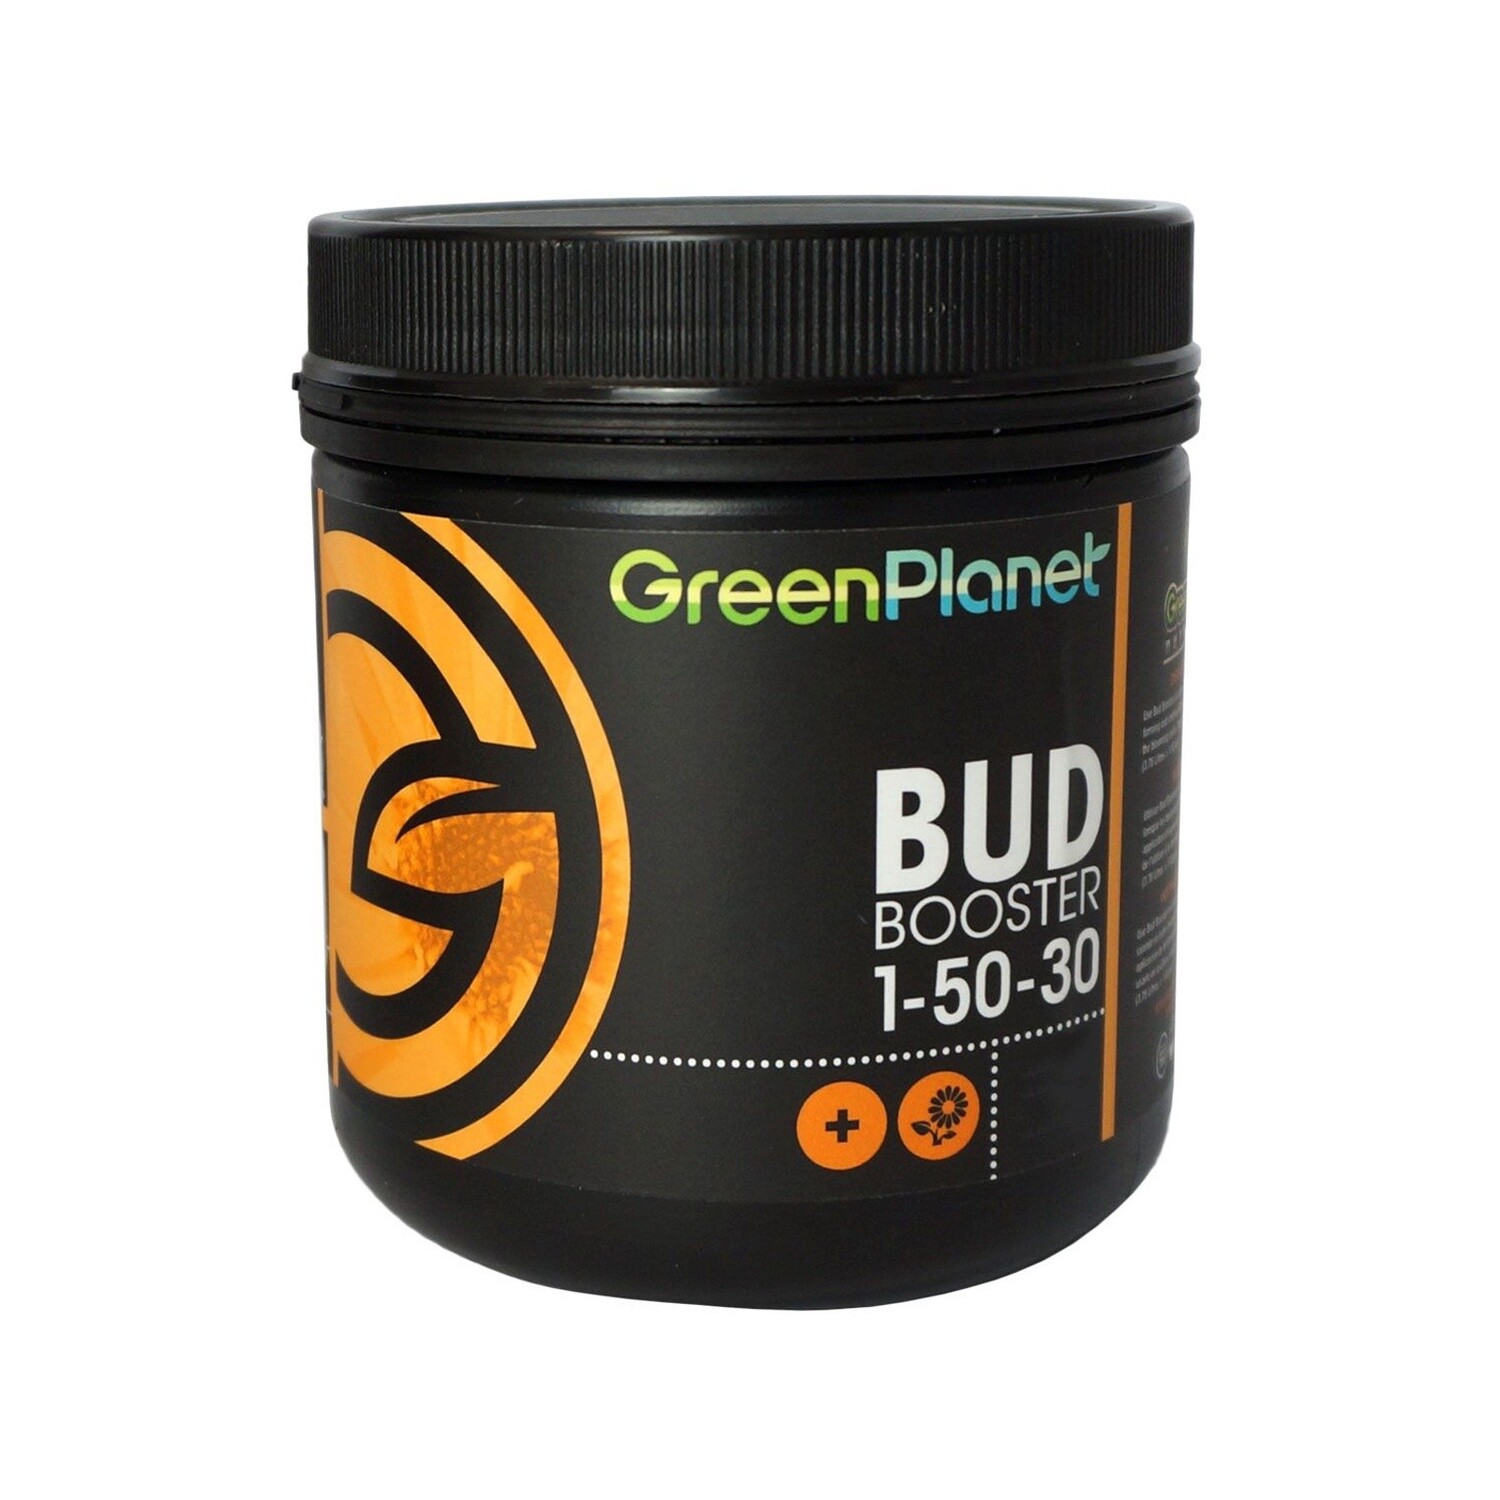 Green Planet Bud Booster 1-50-30 500G Jar